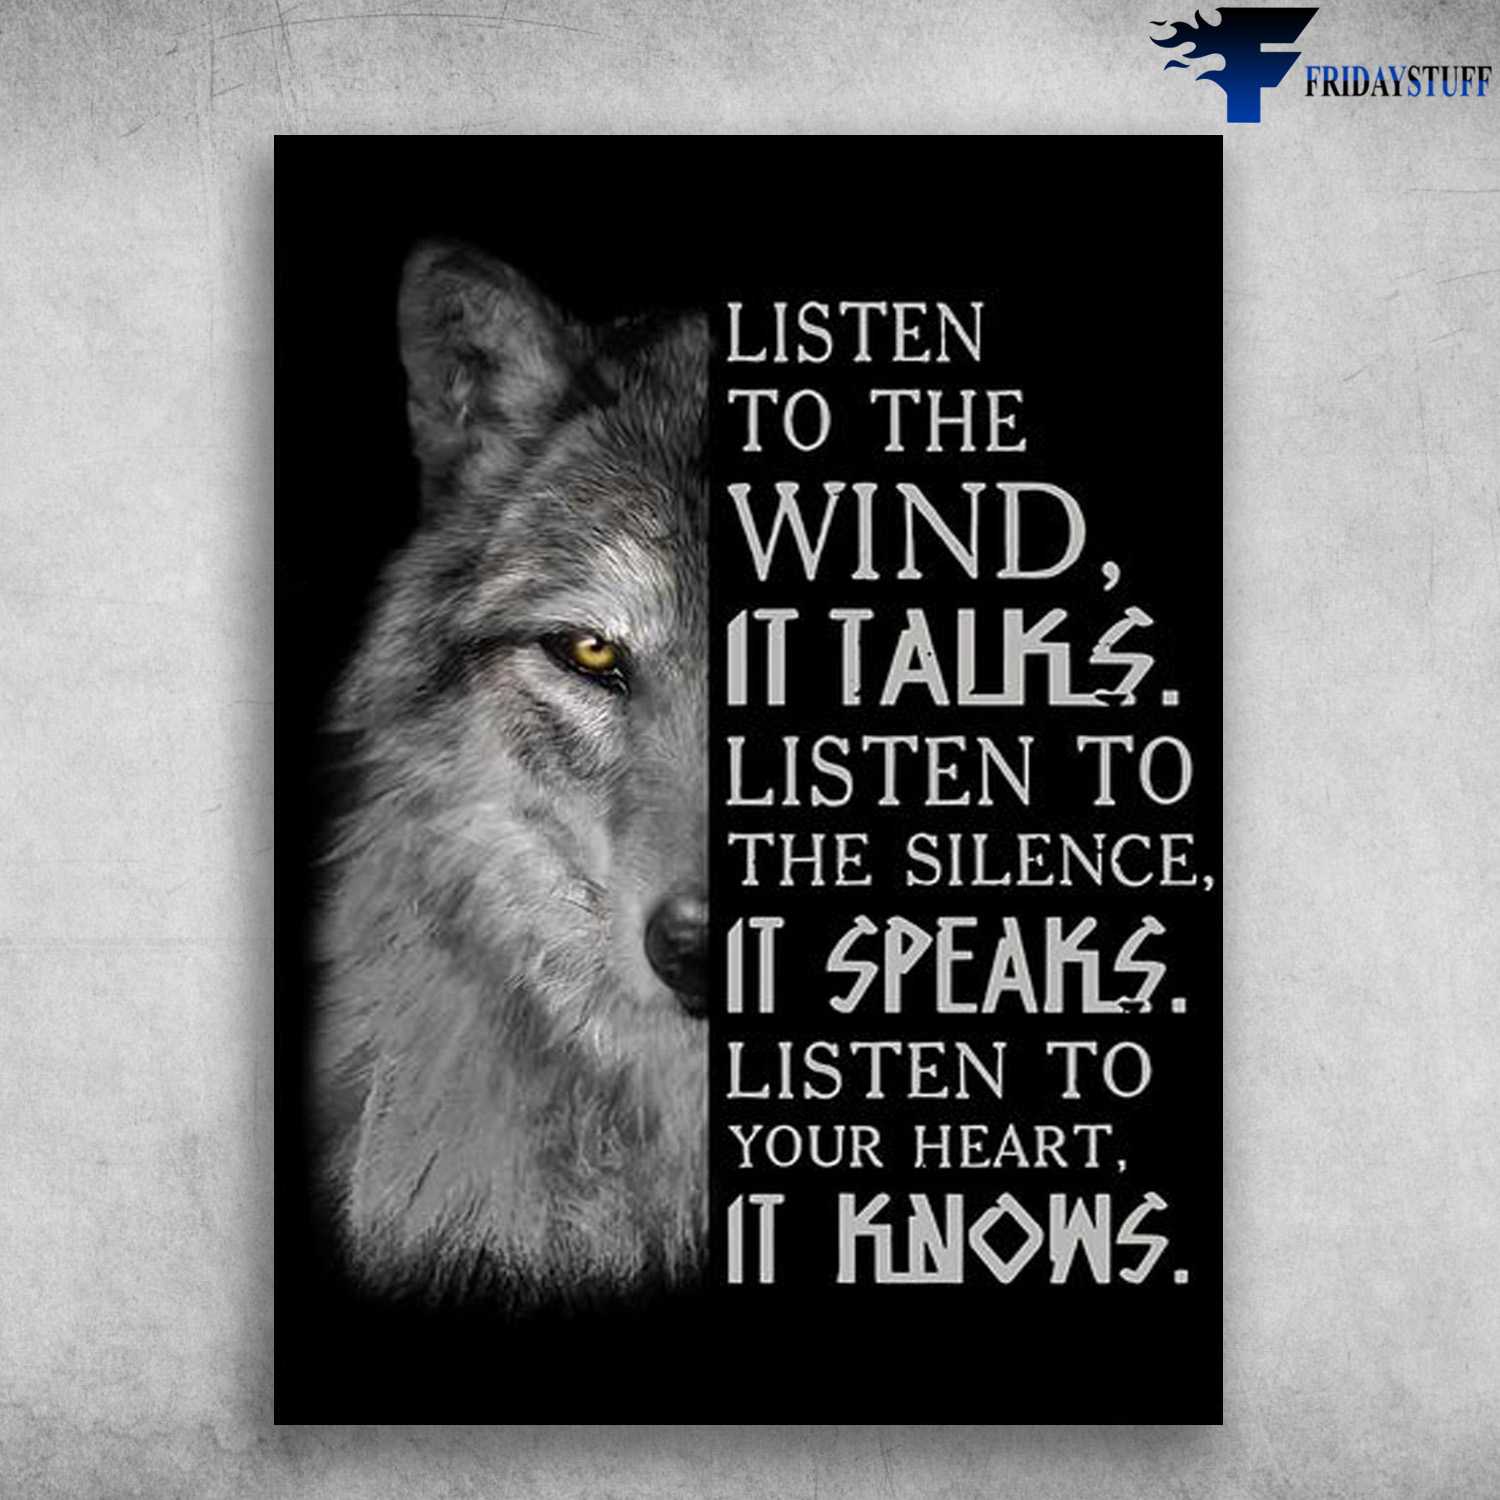 Wolf Poster, Listen To The WInd, It Talks, Listen To The Silence, It Speaks, Listen To Your Heart, It Knows